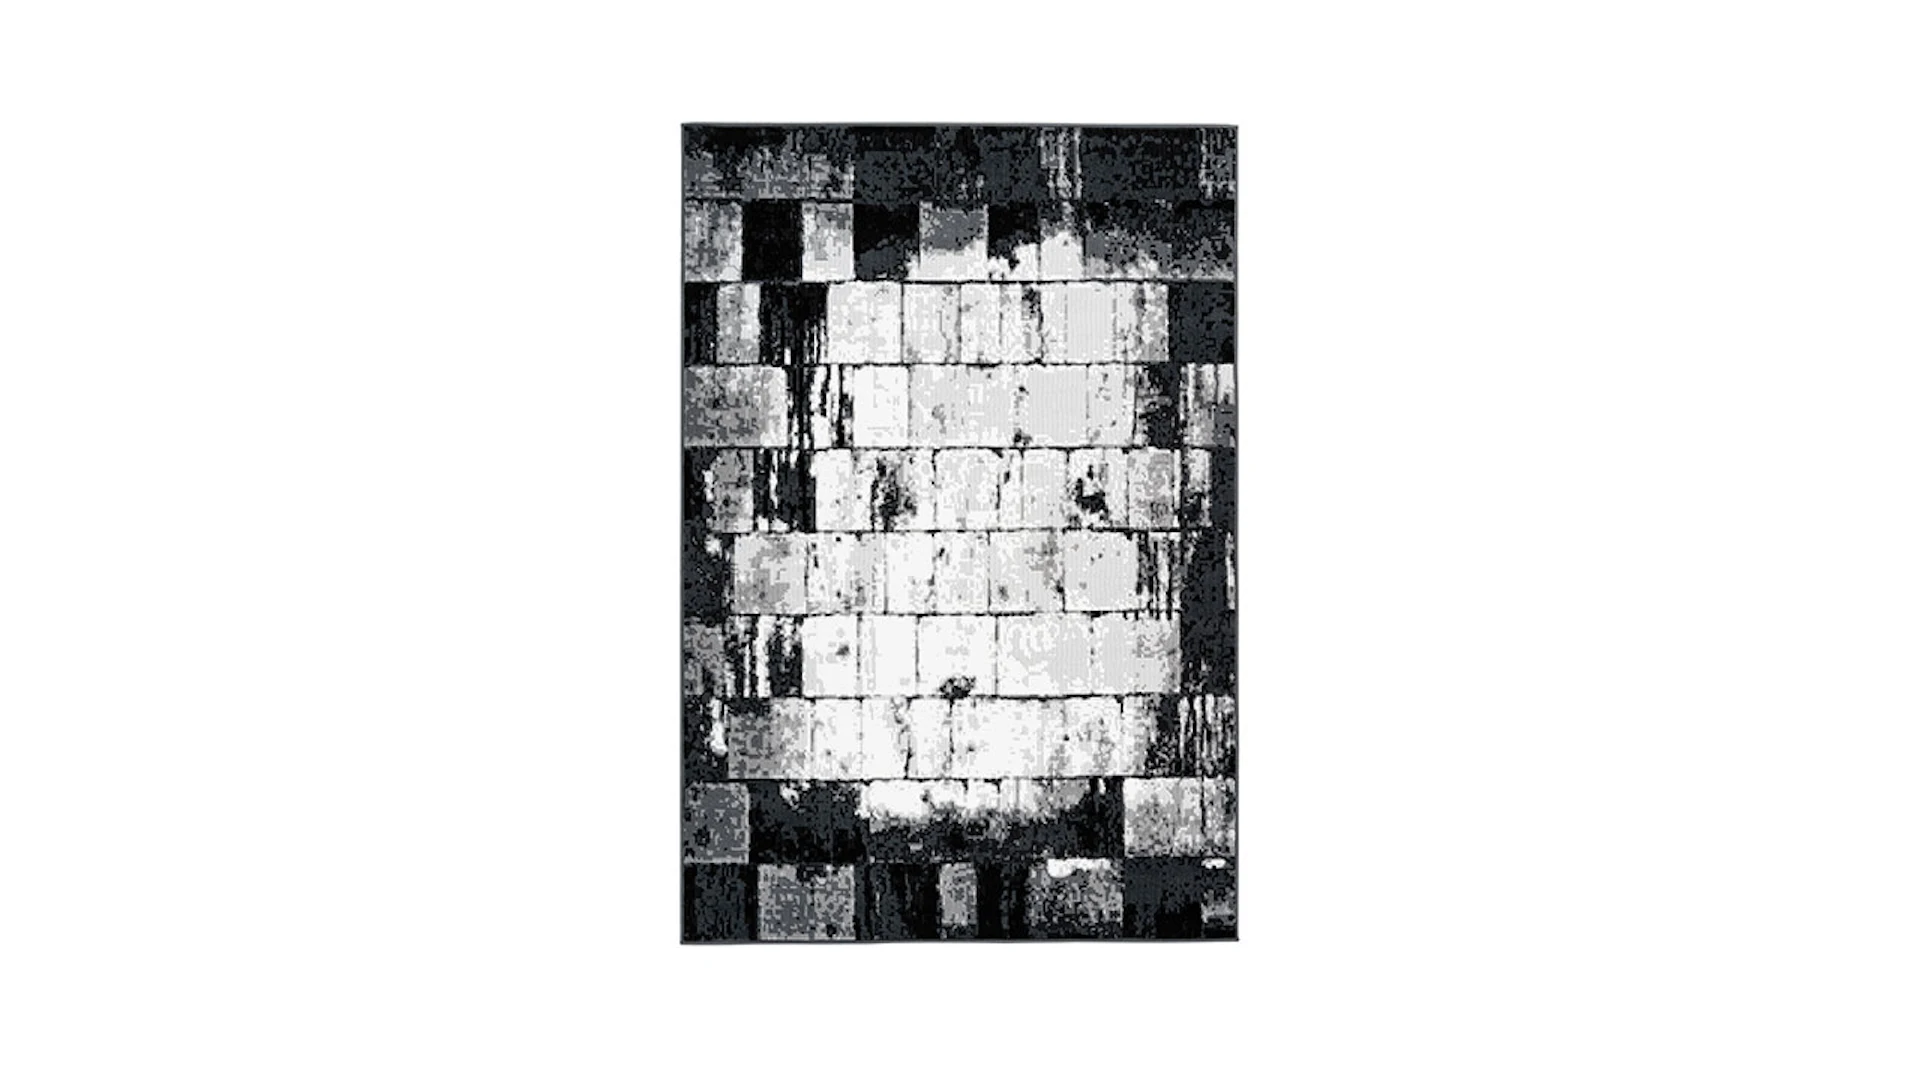 planeo carpet - Esperanto 325 grey / anthracite 200 x 290 cm